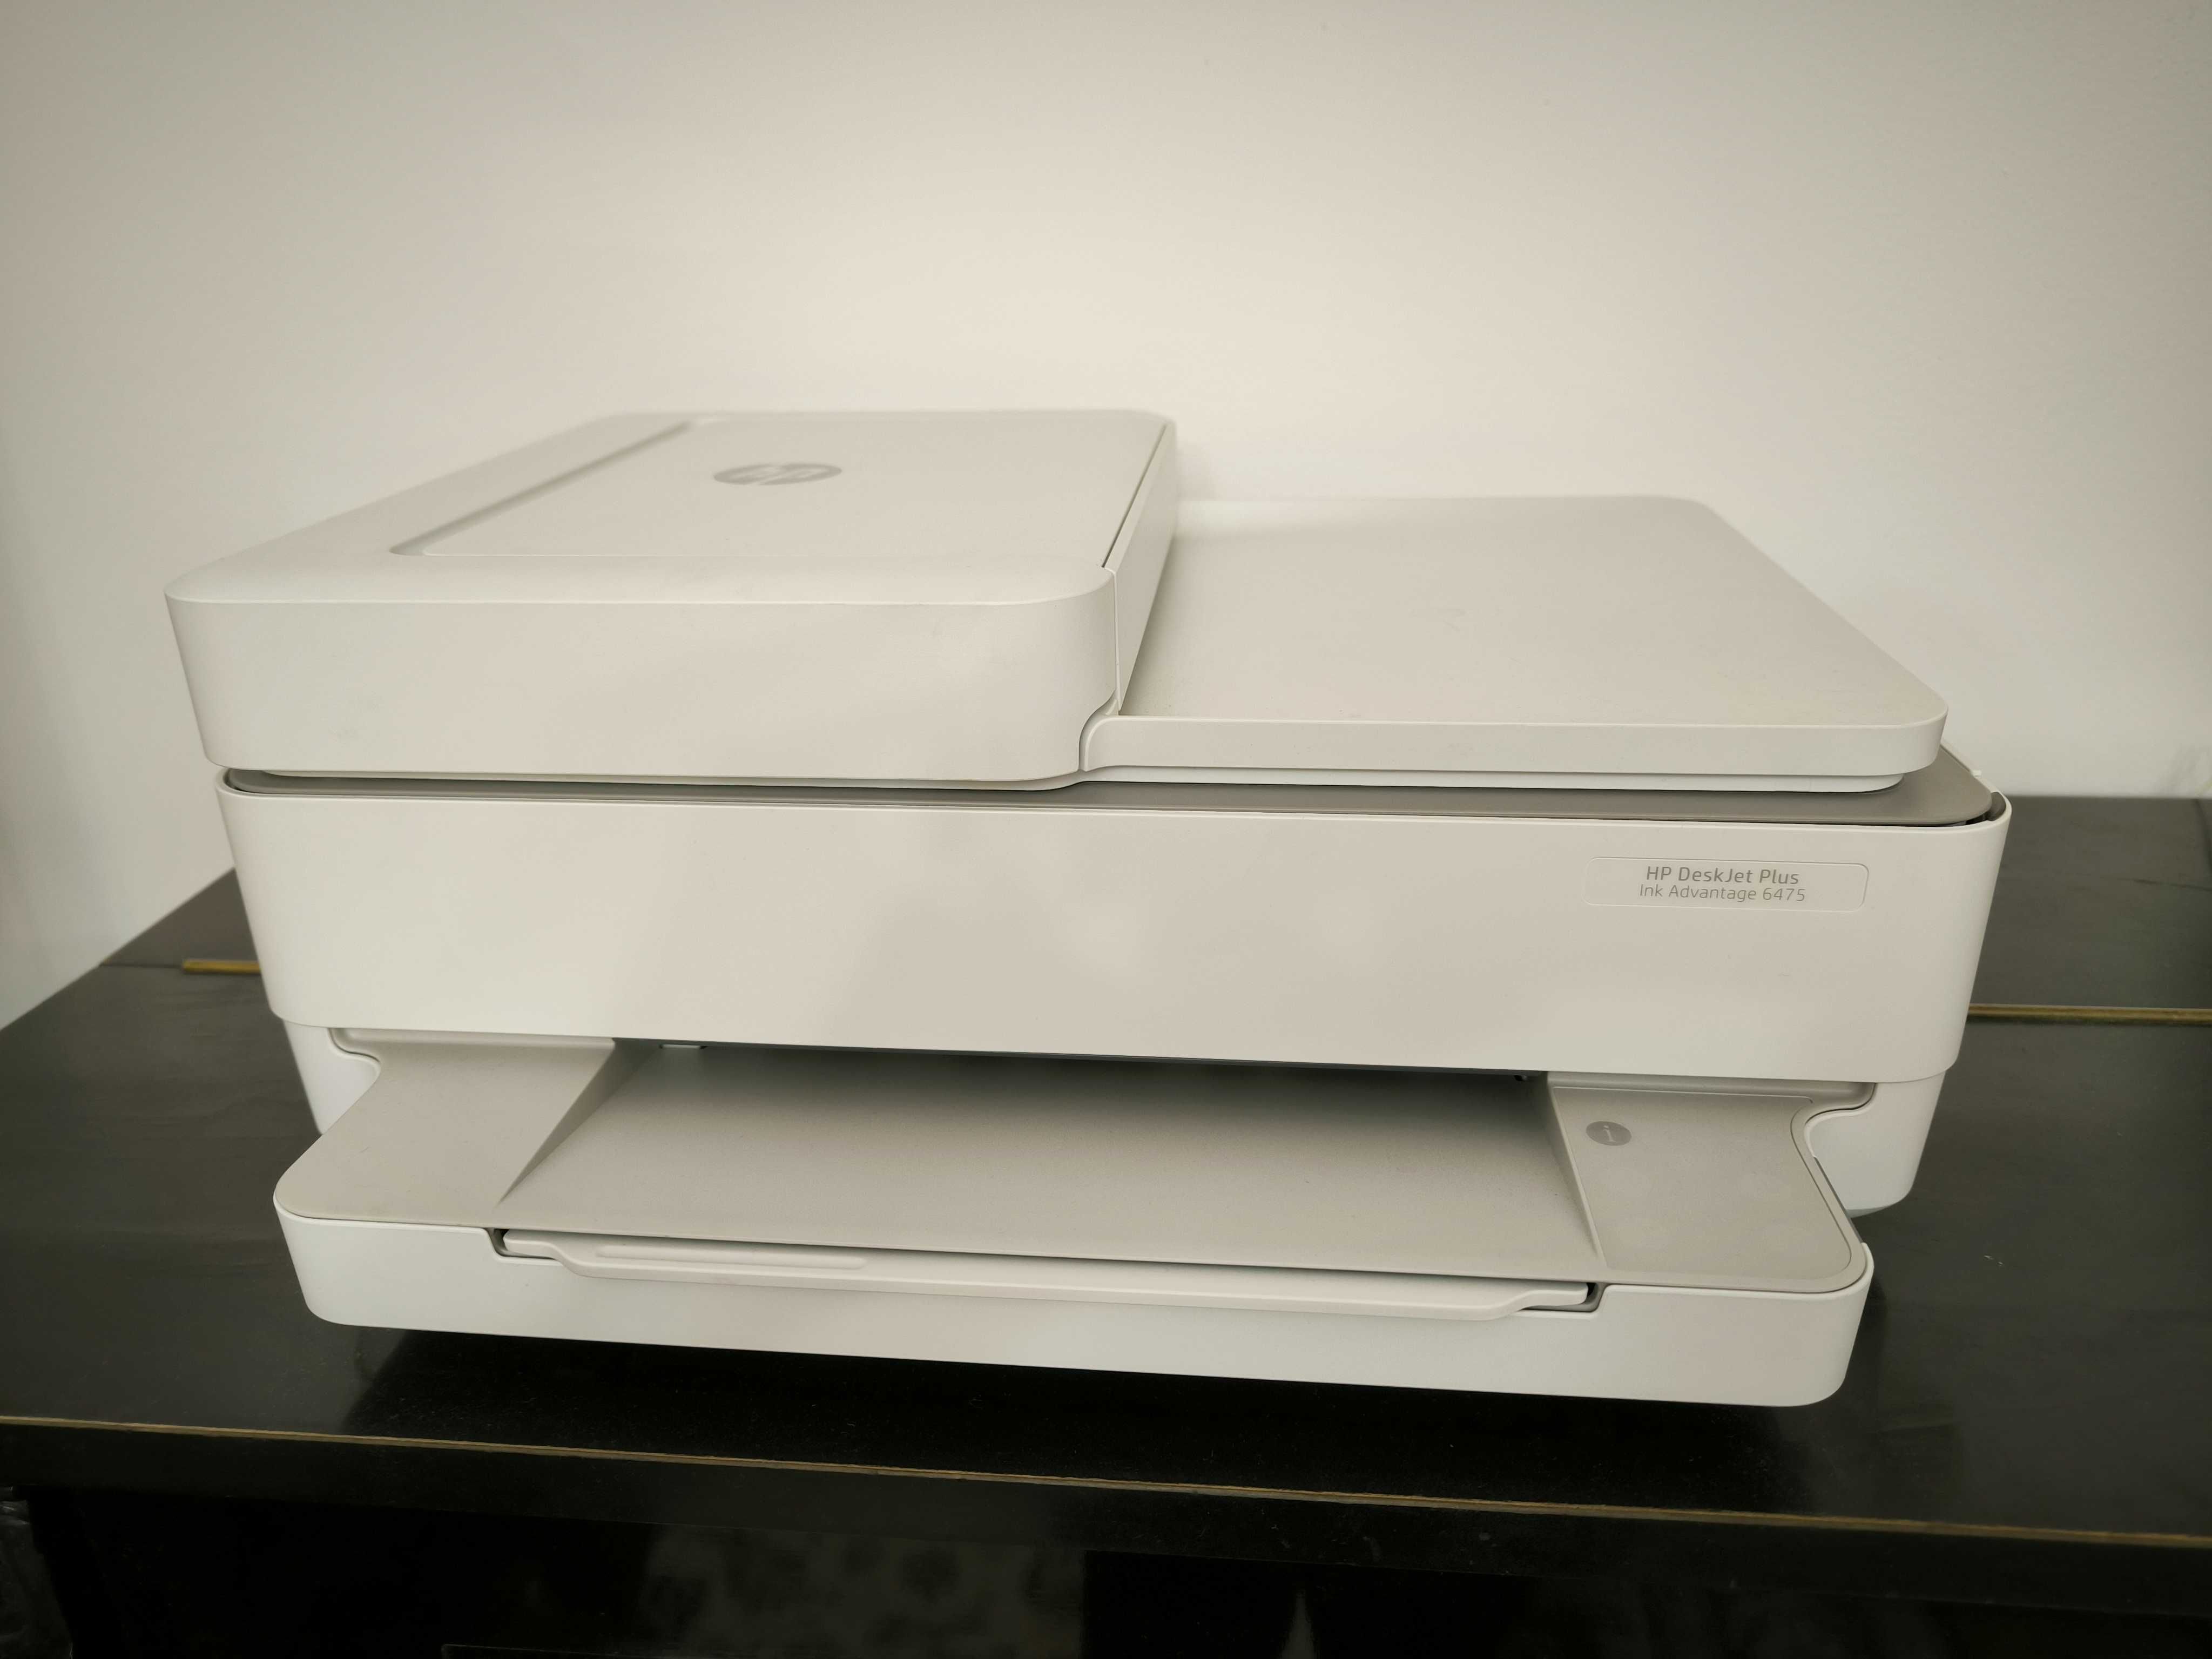 Imprimanta multifunctionala HP Deskjet Plus ENVY 6475 color inkjet